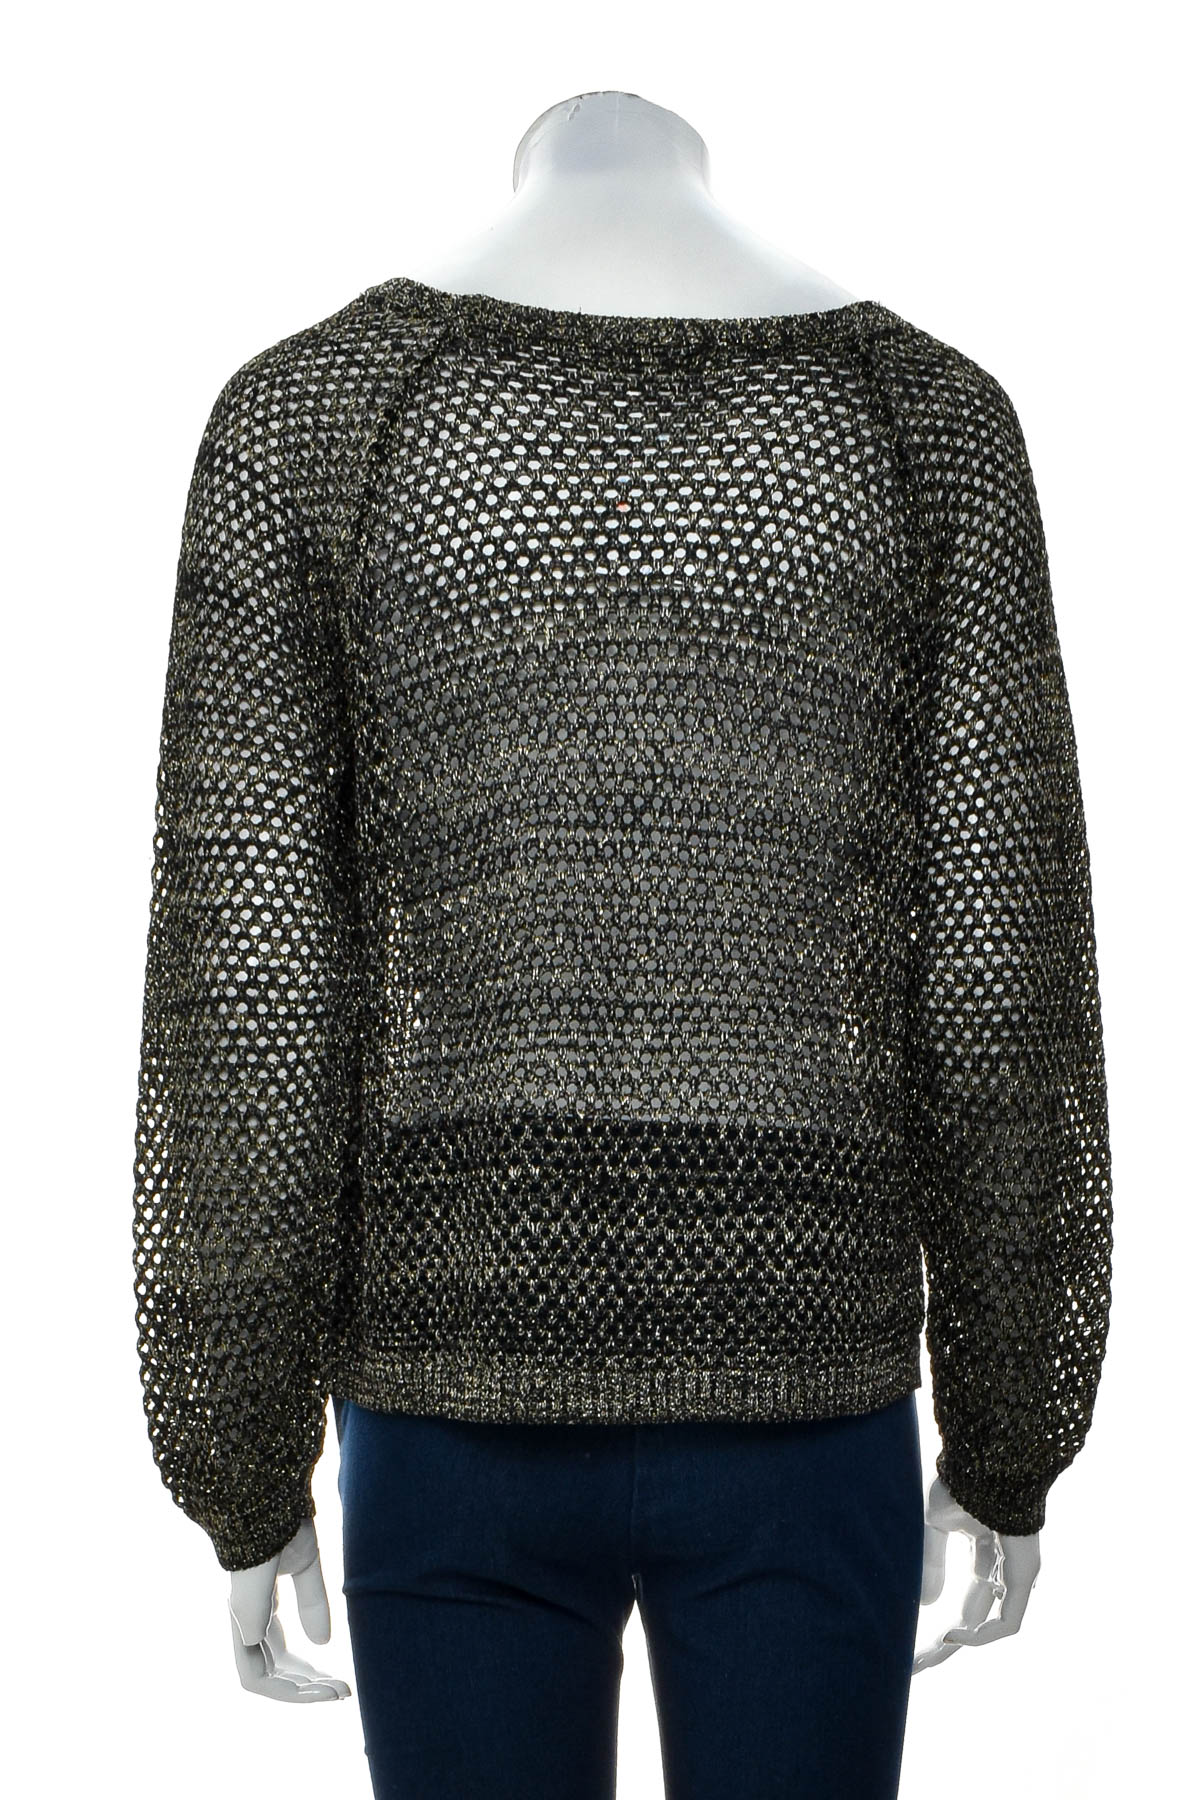 Women's sweater - ZARA TRAFALUC - 1